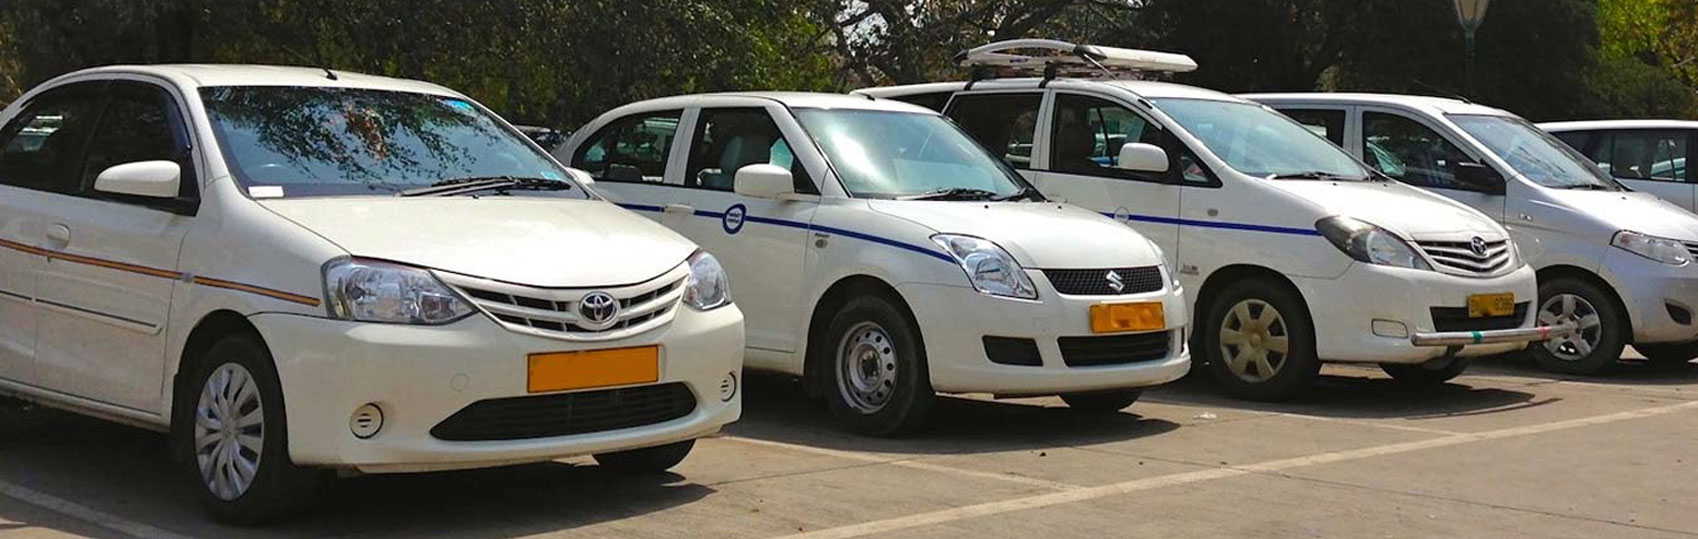 Ajmer Taxi Services in Gurgaon